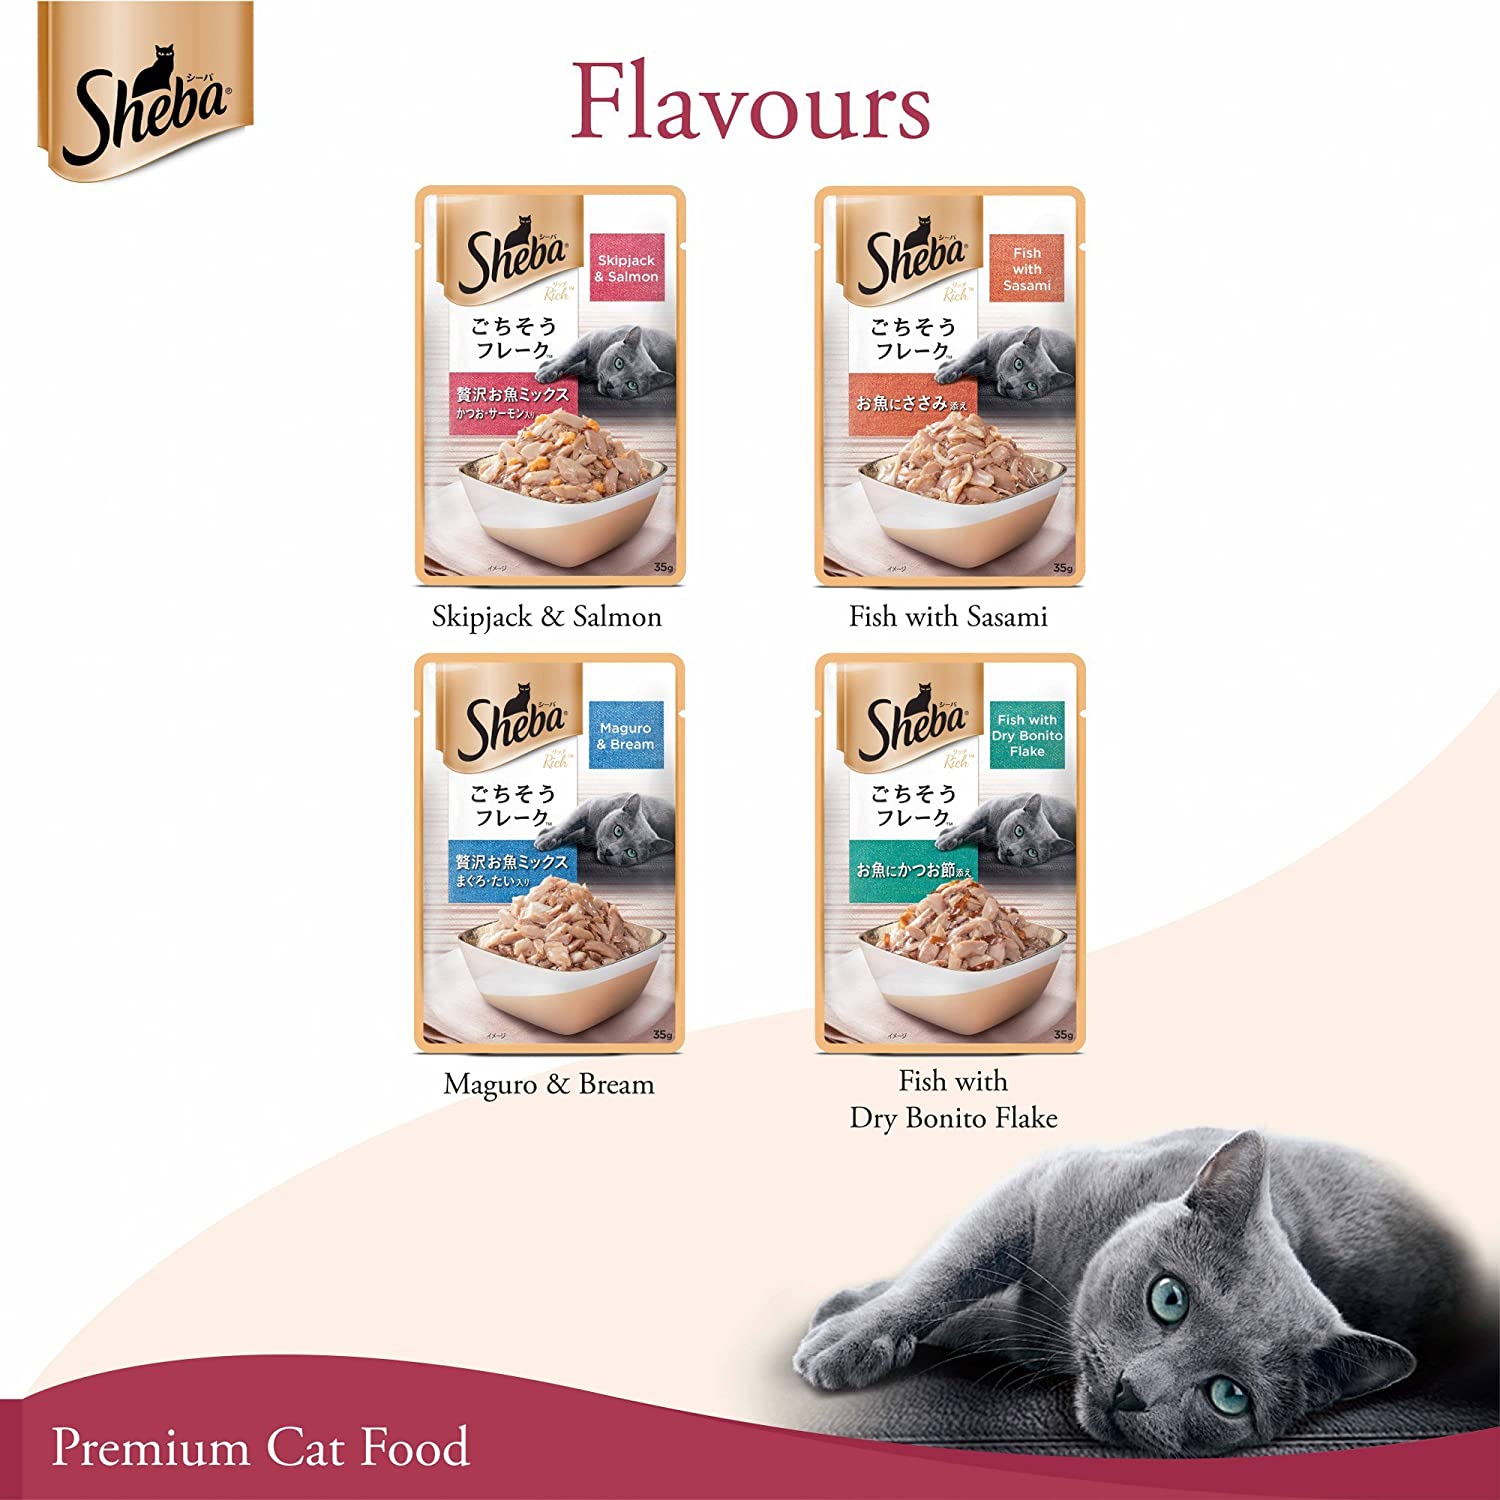 Sheba Skipjack & Salmon Cat Wet Food